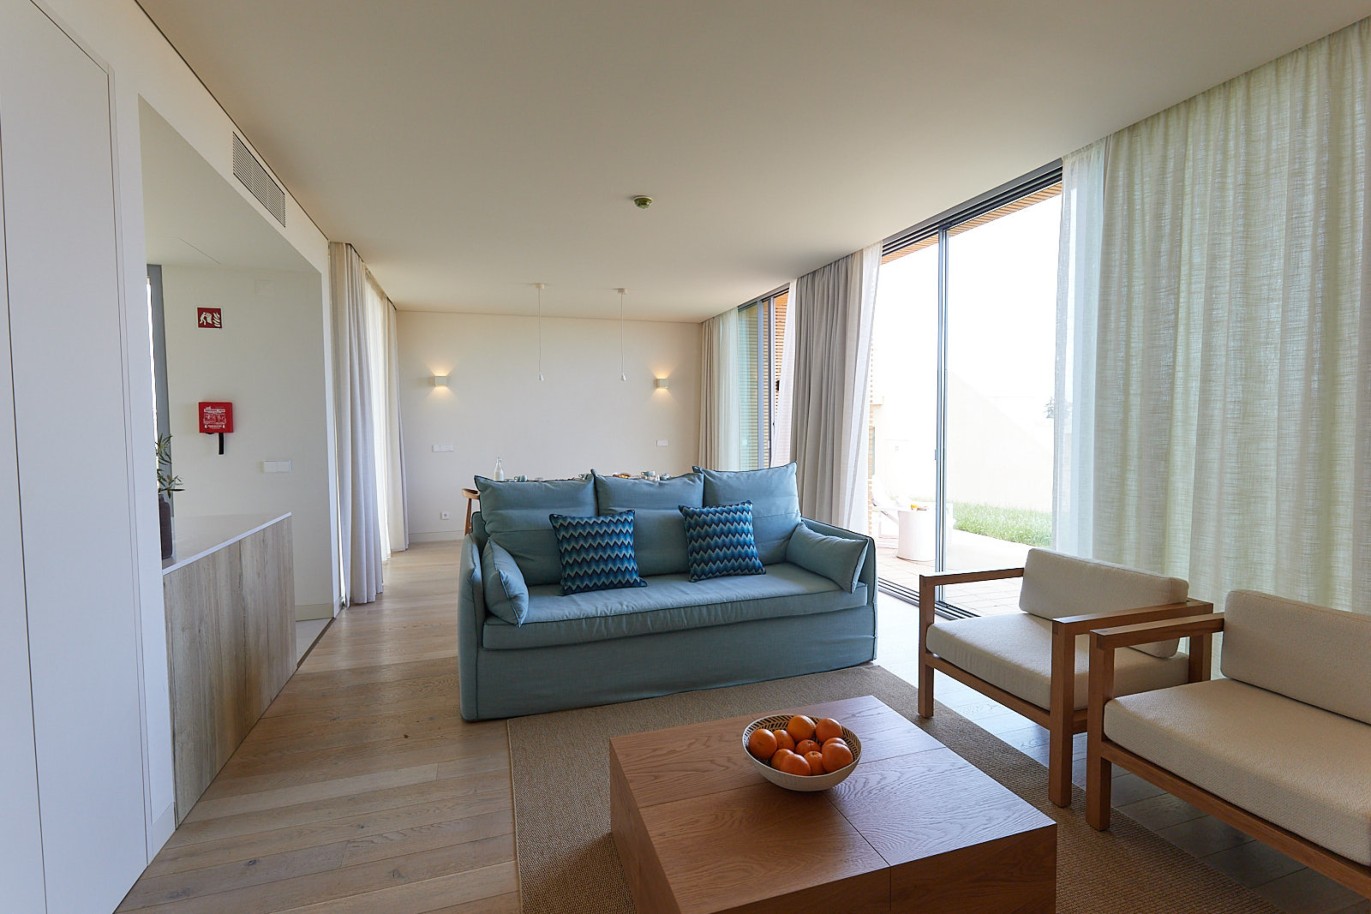 2 bedroom apartment in resort, for sale in Porches, Algarve_228896